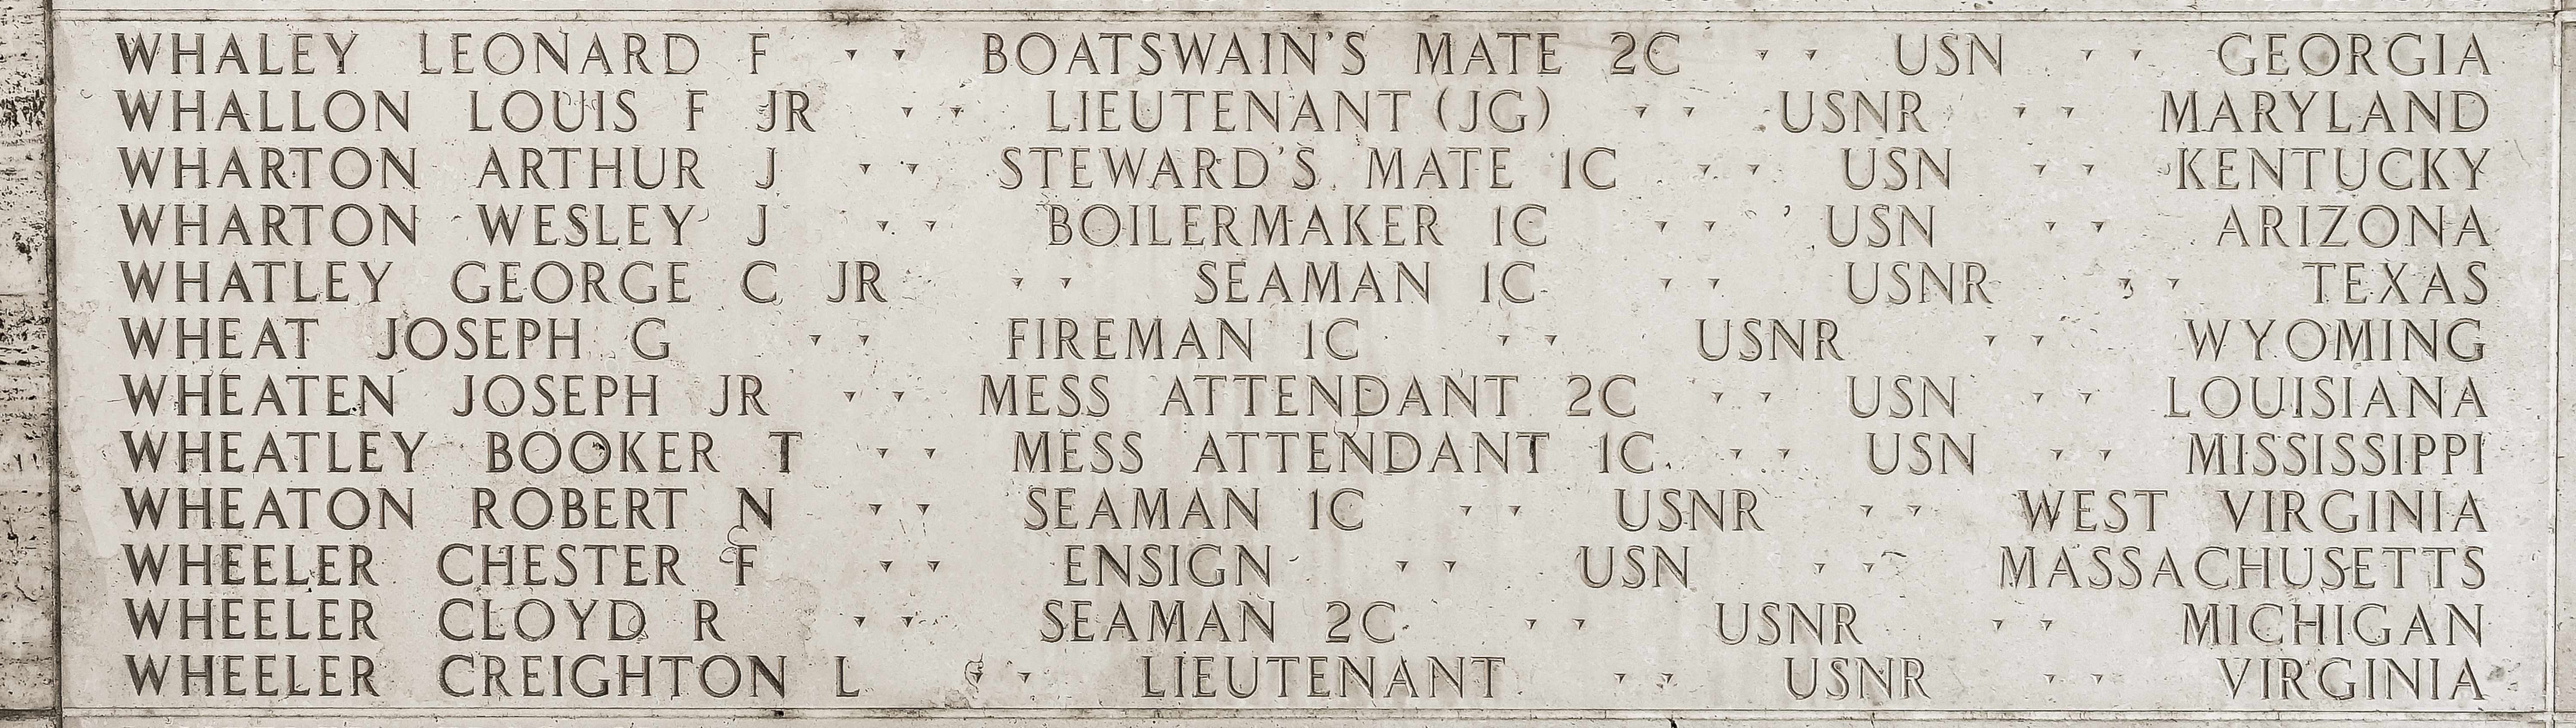 Leonard F. Whaley, Boatswain's Mate Second Class